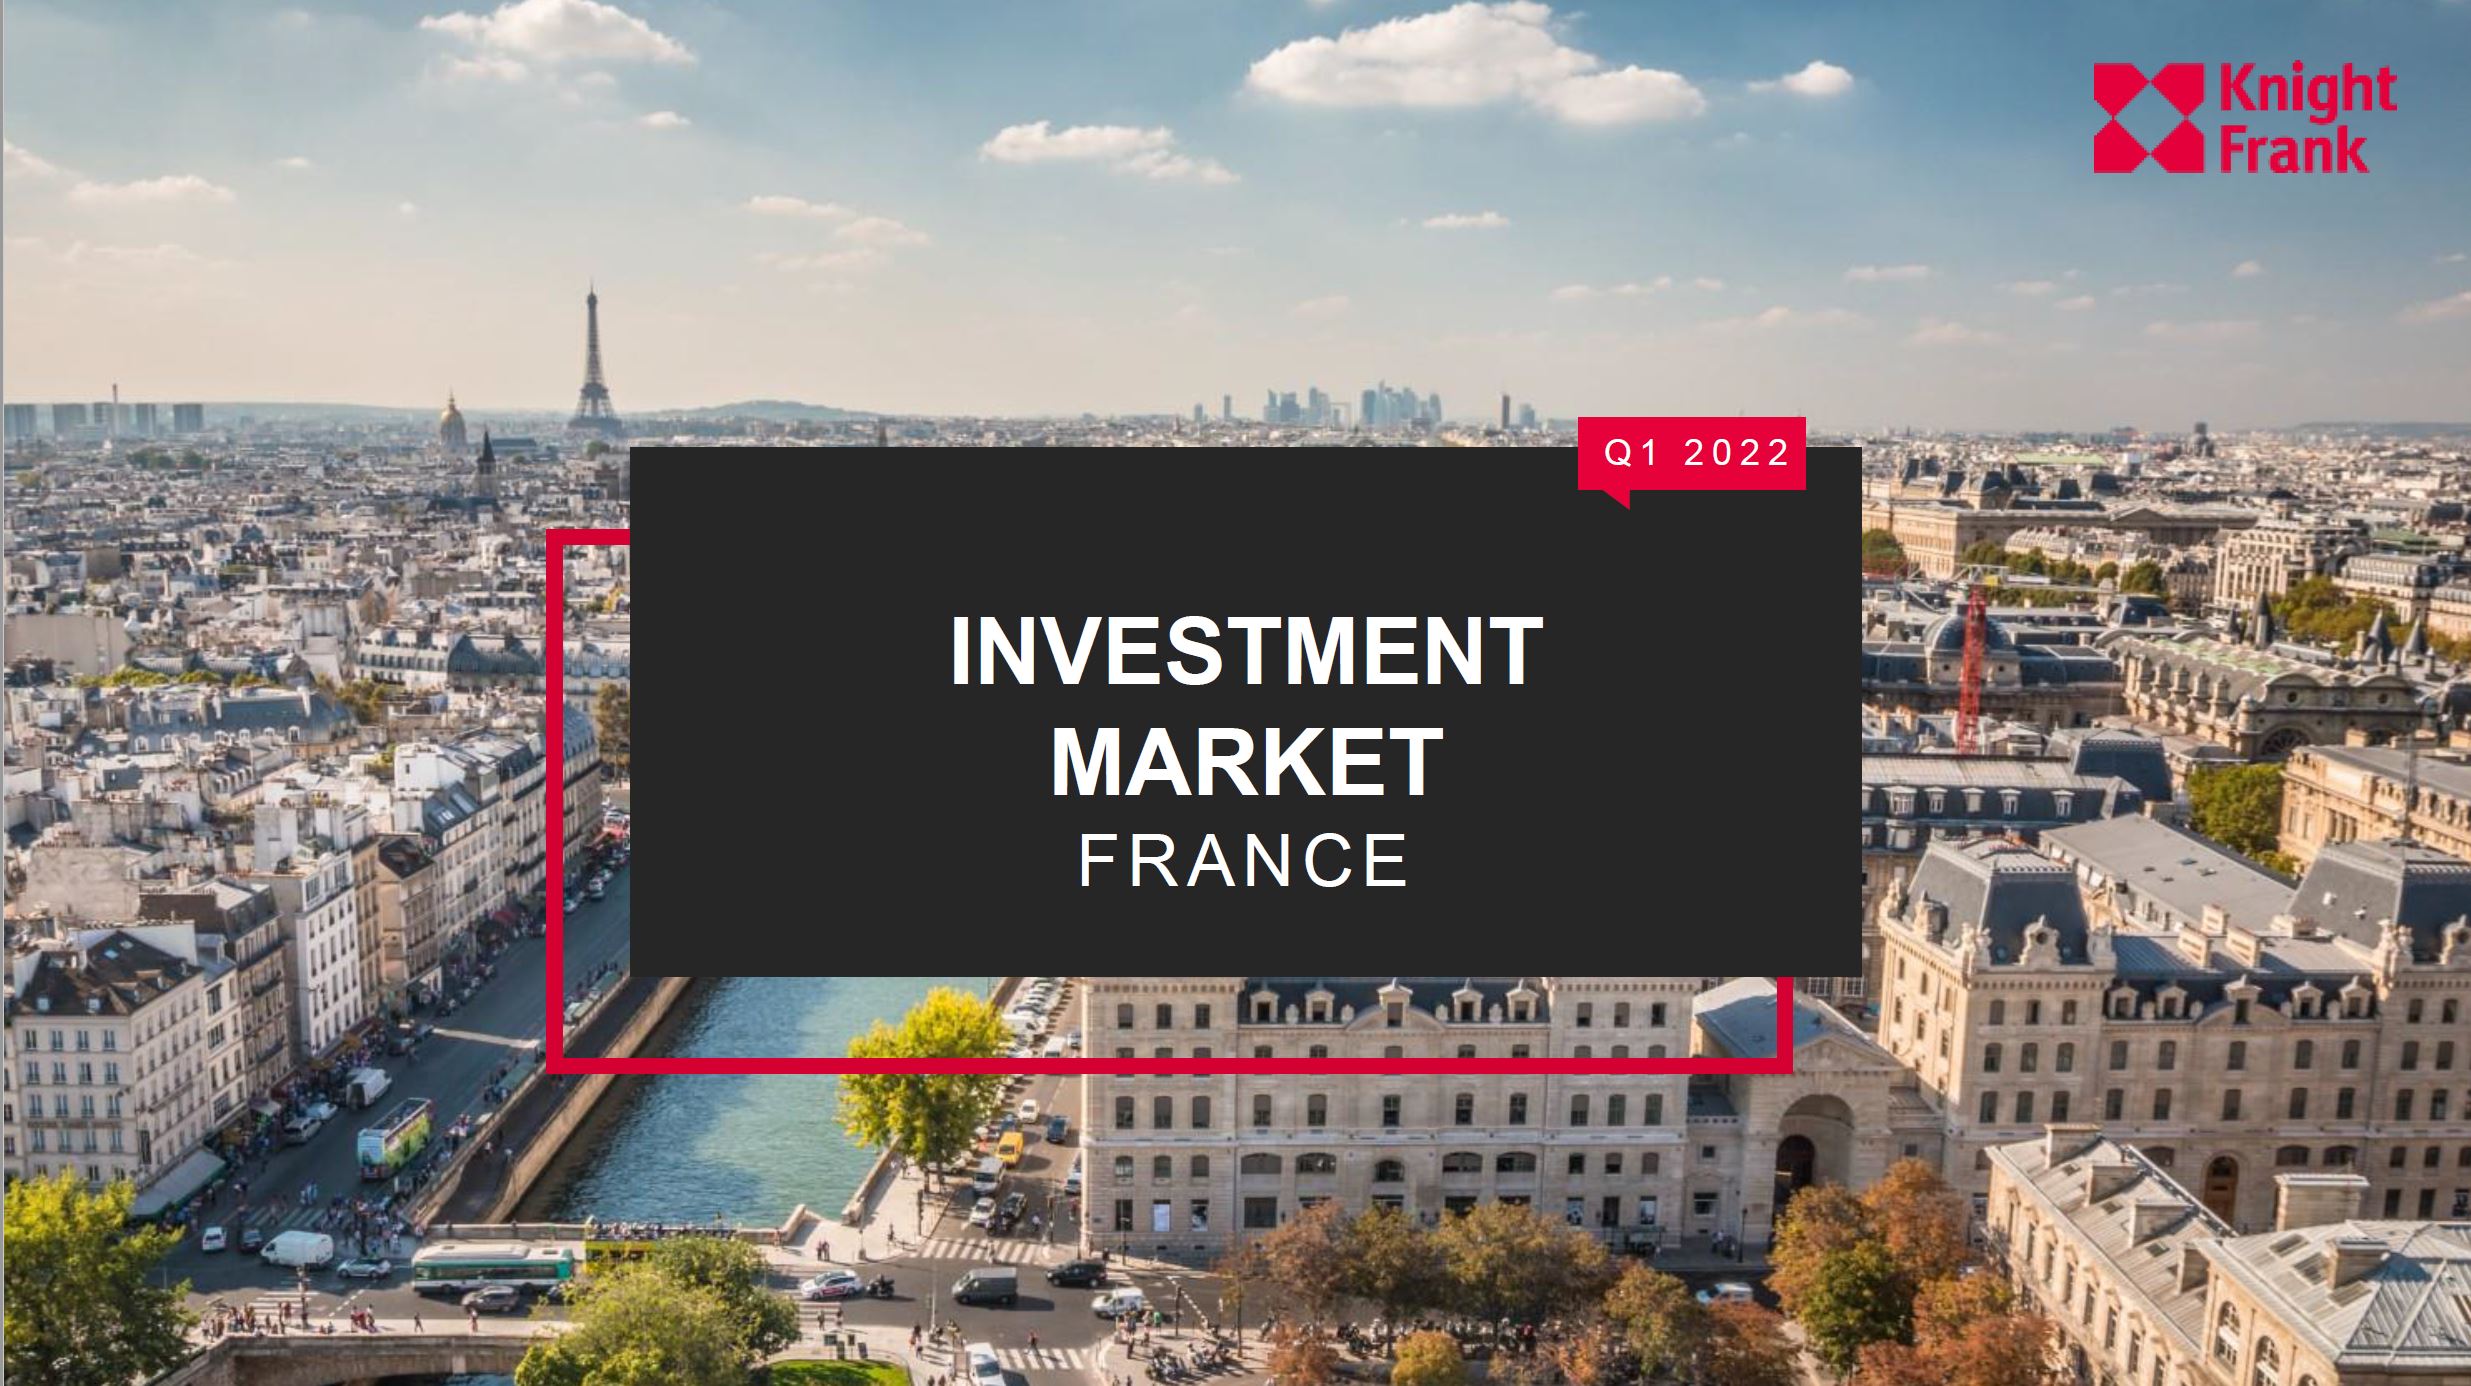 Investment market - France - Q1 2022